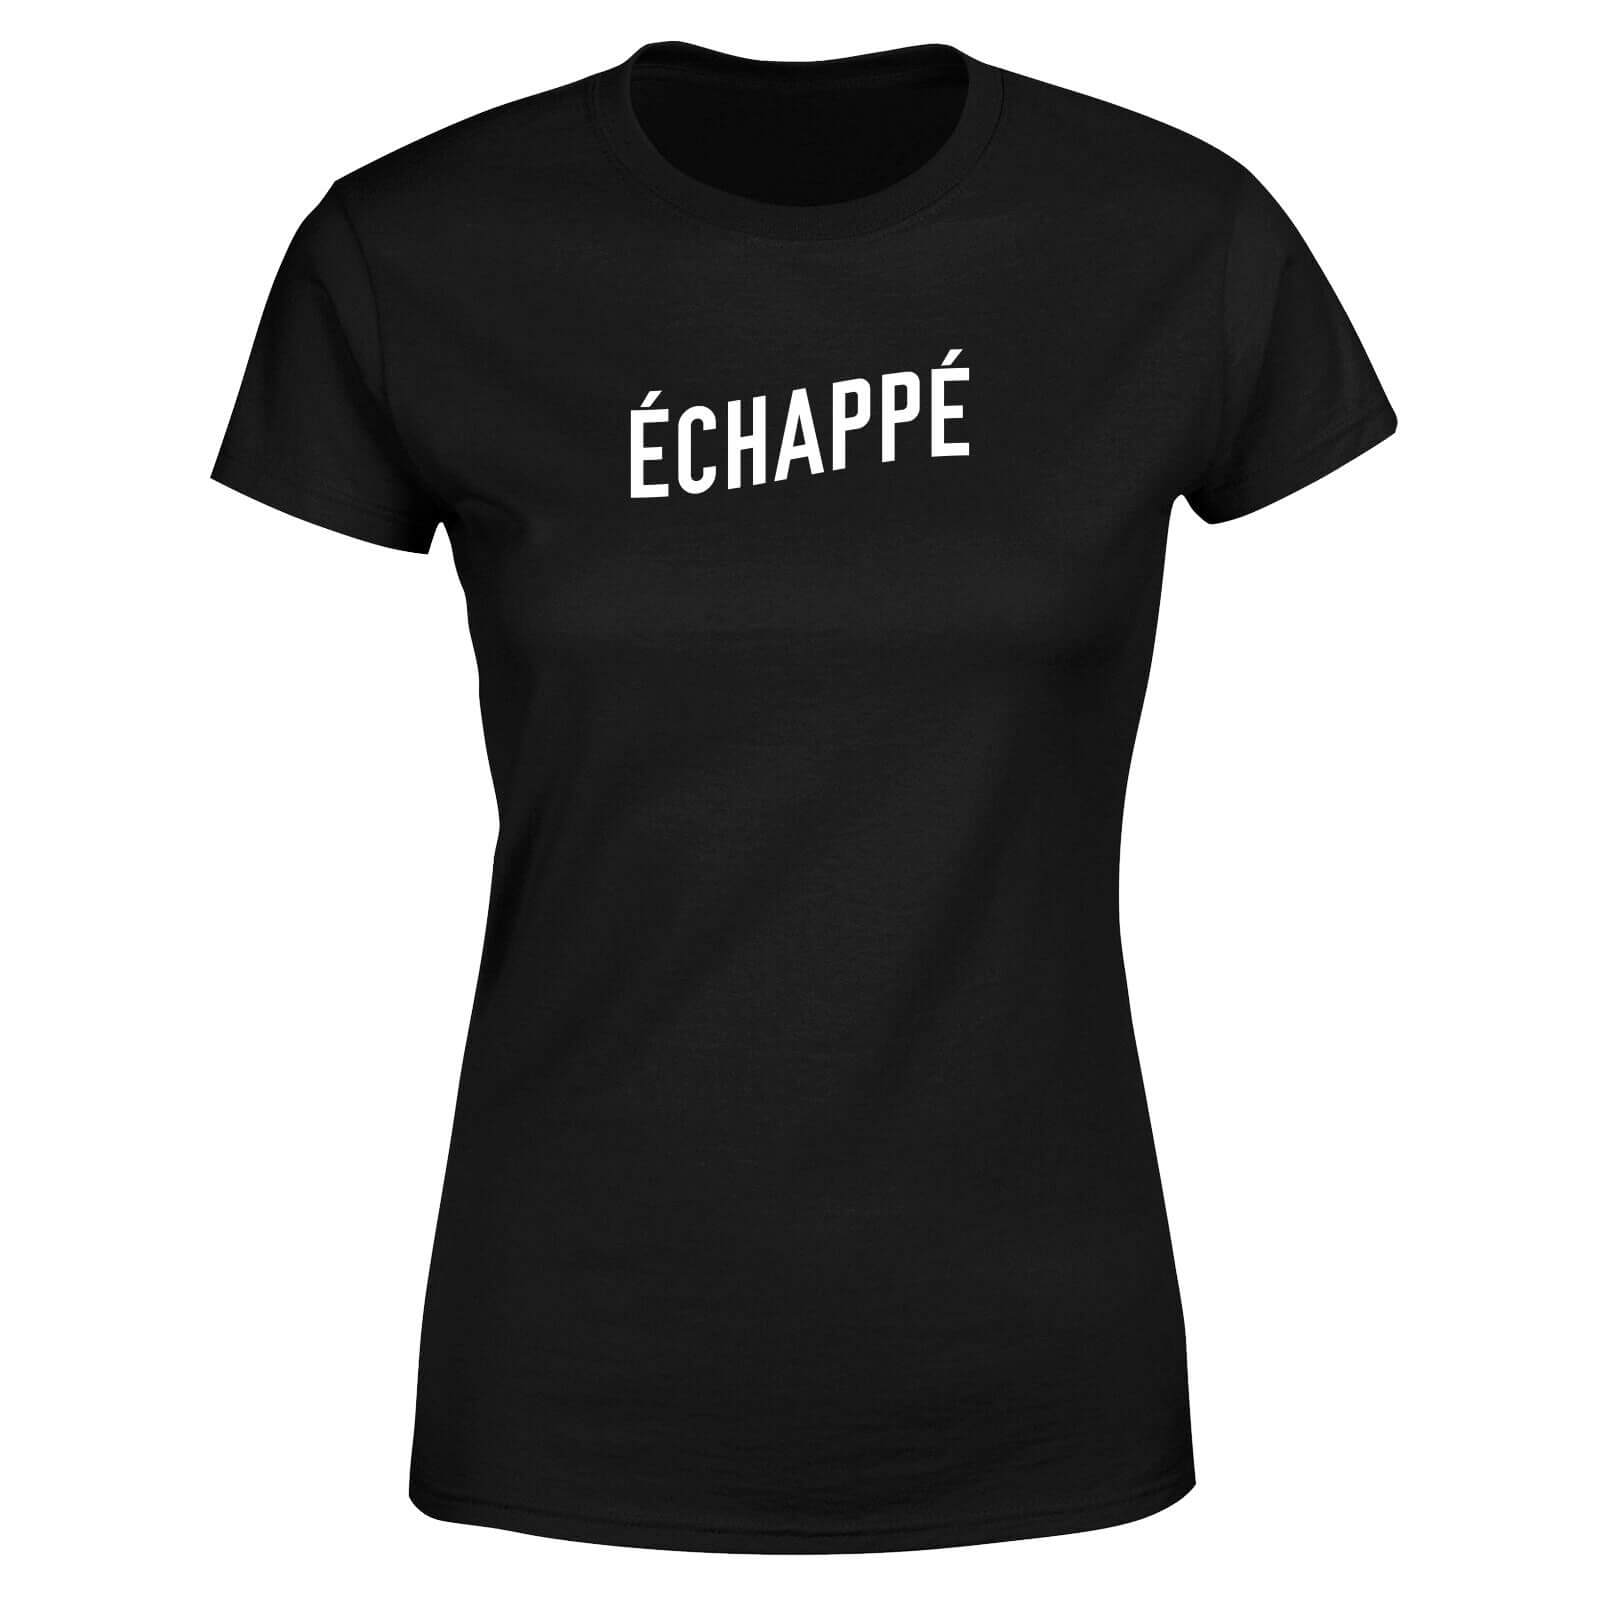 Echappe Women's T-Shirt - Black - S - Black